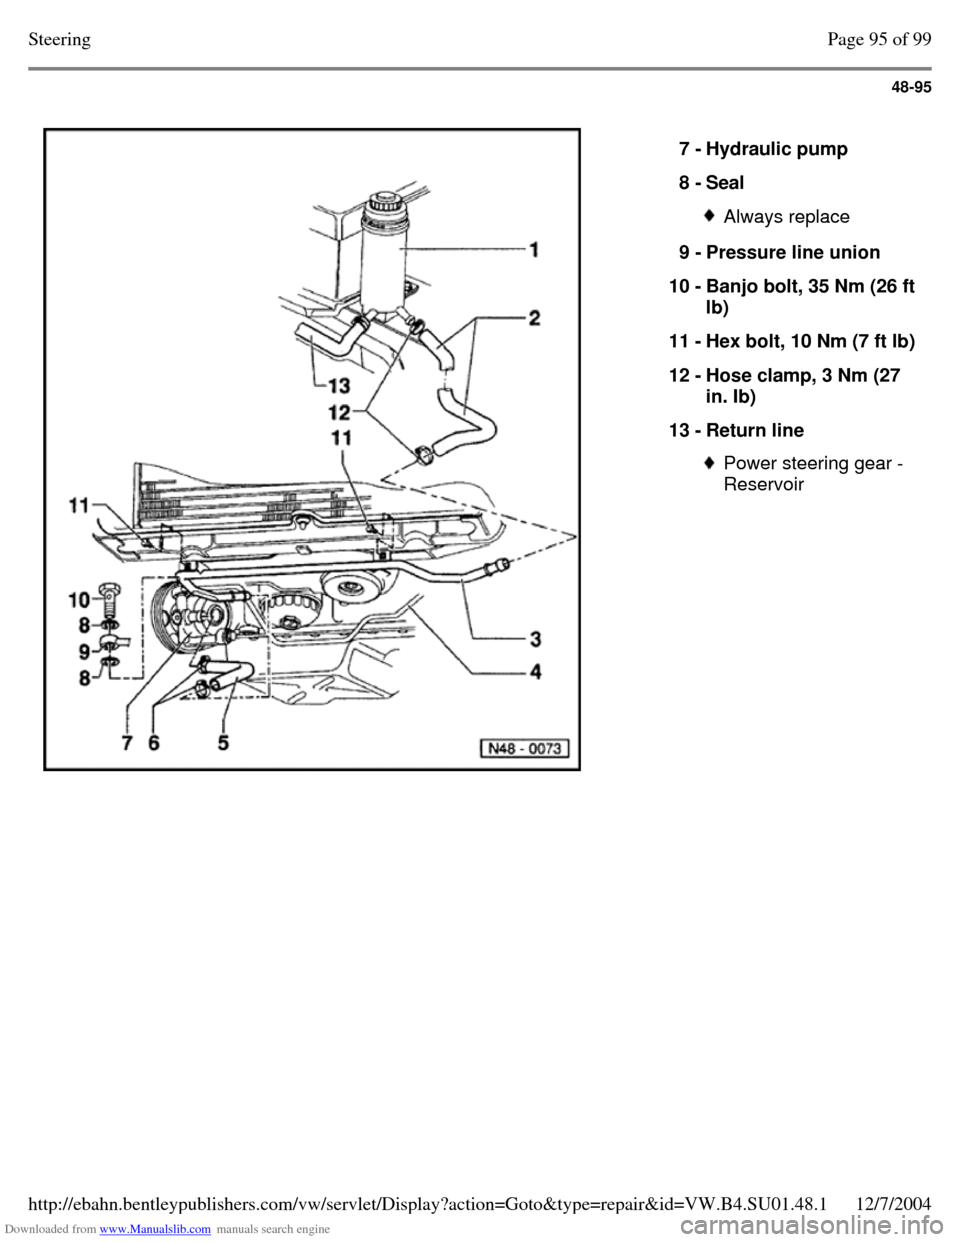 VOLKSWAGEN PASSAT 1997 B3, B4 / 3.G Service Workshop Manual Downloaded from www.Manualslib.com manuals search engine 48-95
   
7 - Hydraulic pump 
8 - Seal  Always replace 9 - Pressure line union 
10 - Banjo bolt, 35 Nm (26 ft lb) 
11 - Hex bolt, 10 Nm (7 ft l